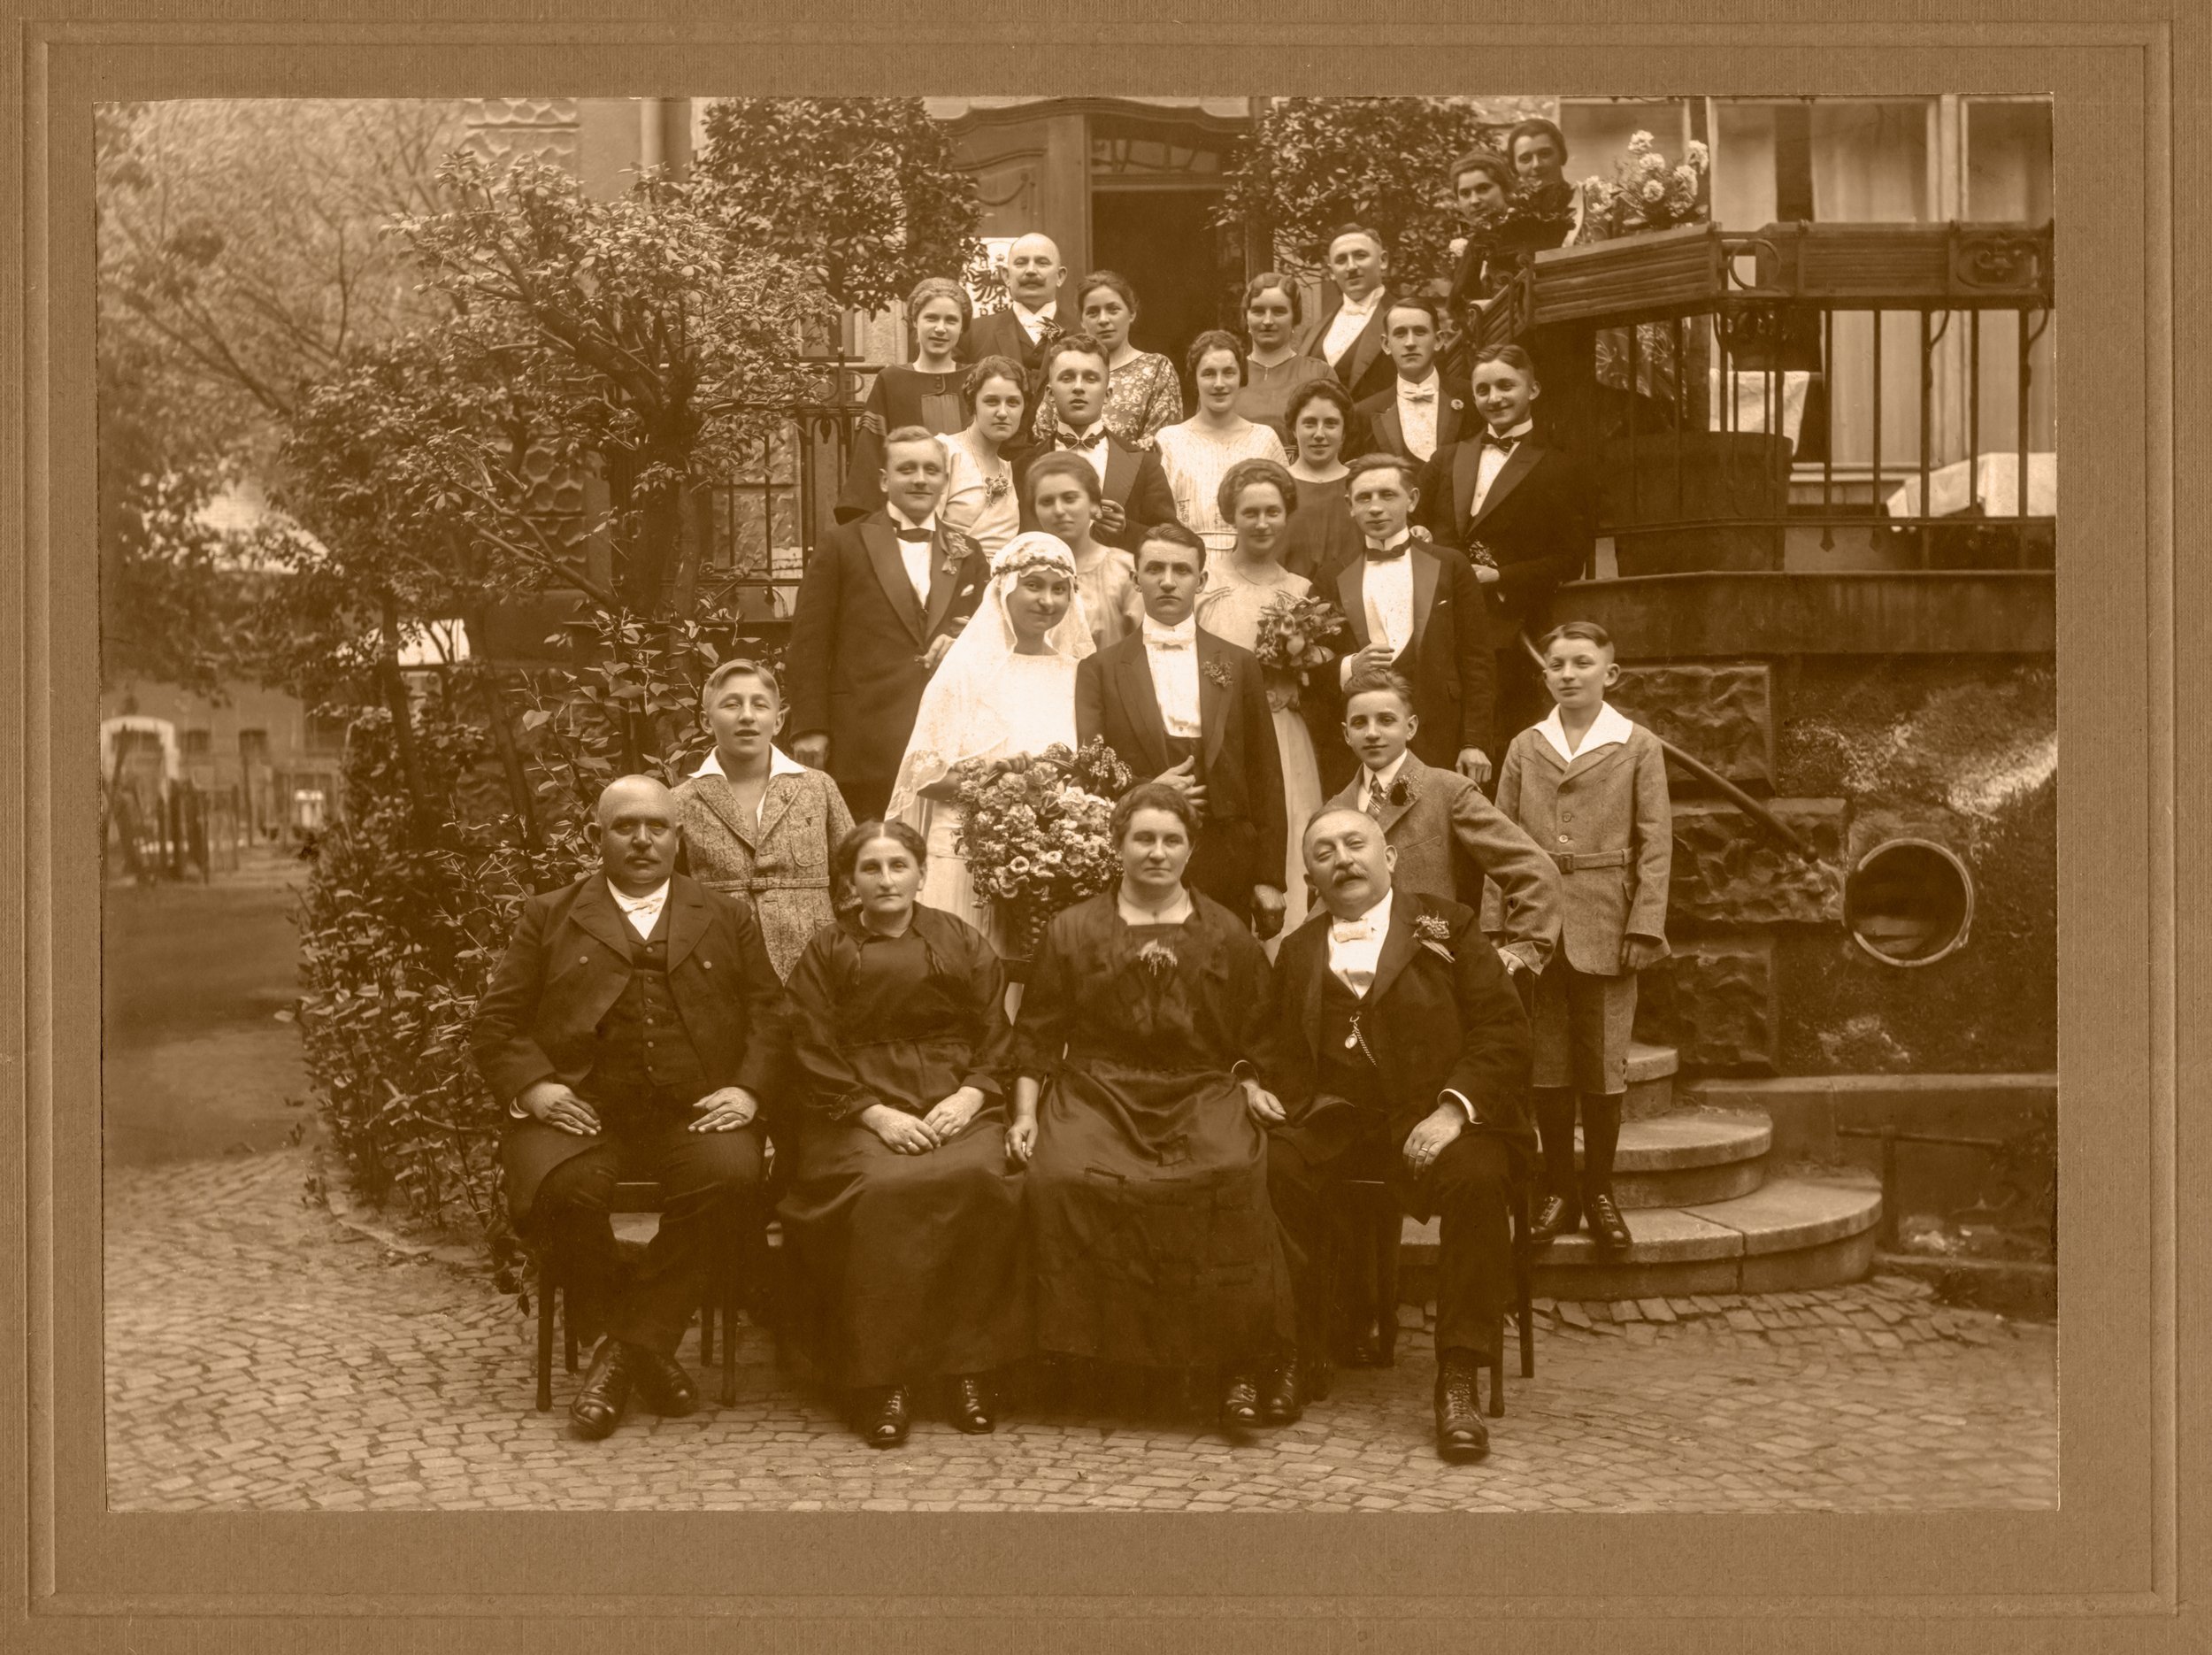 Sonneberg, Germany, May 20, 1922